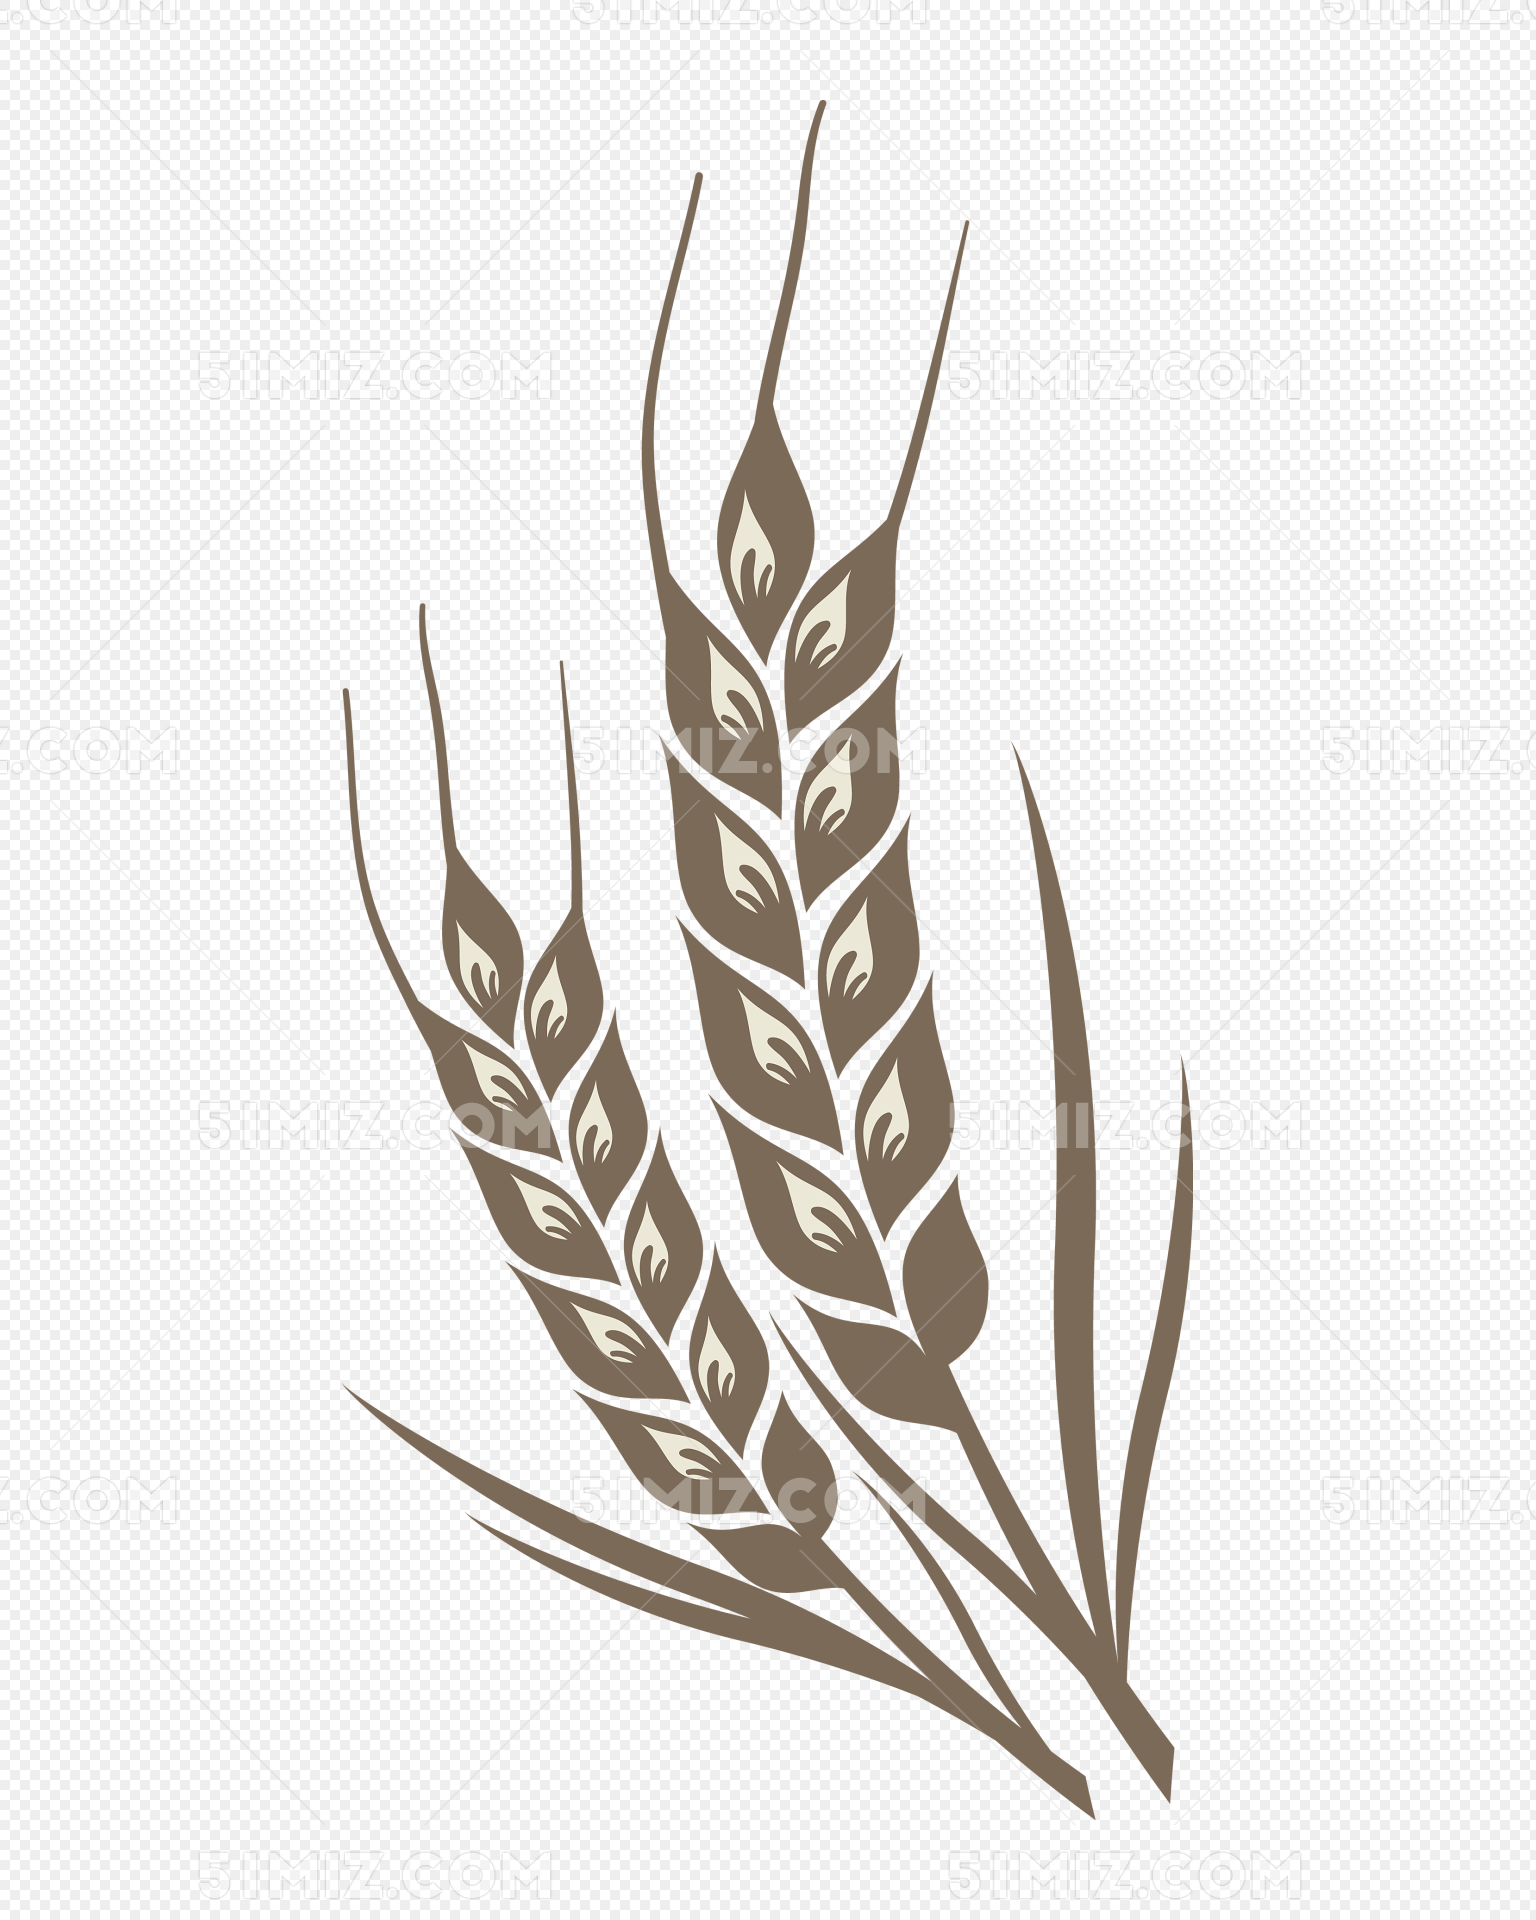 Ears of oat, spelt, wheat and barley - Stock Photo - Dissolve